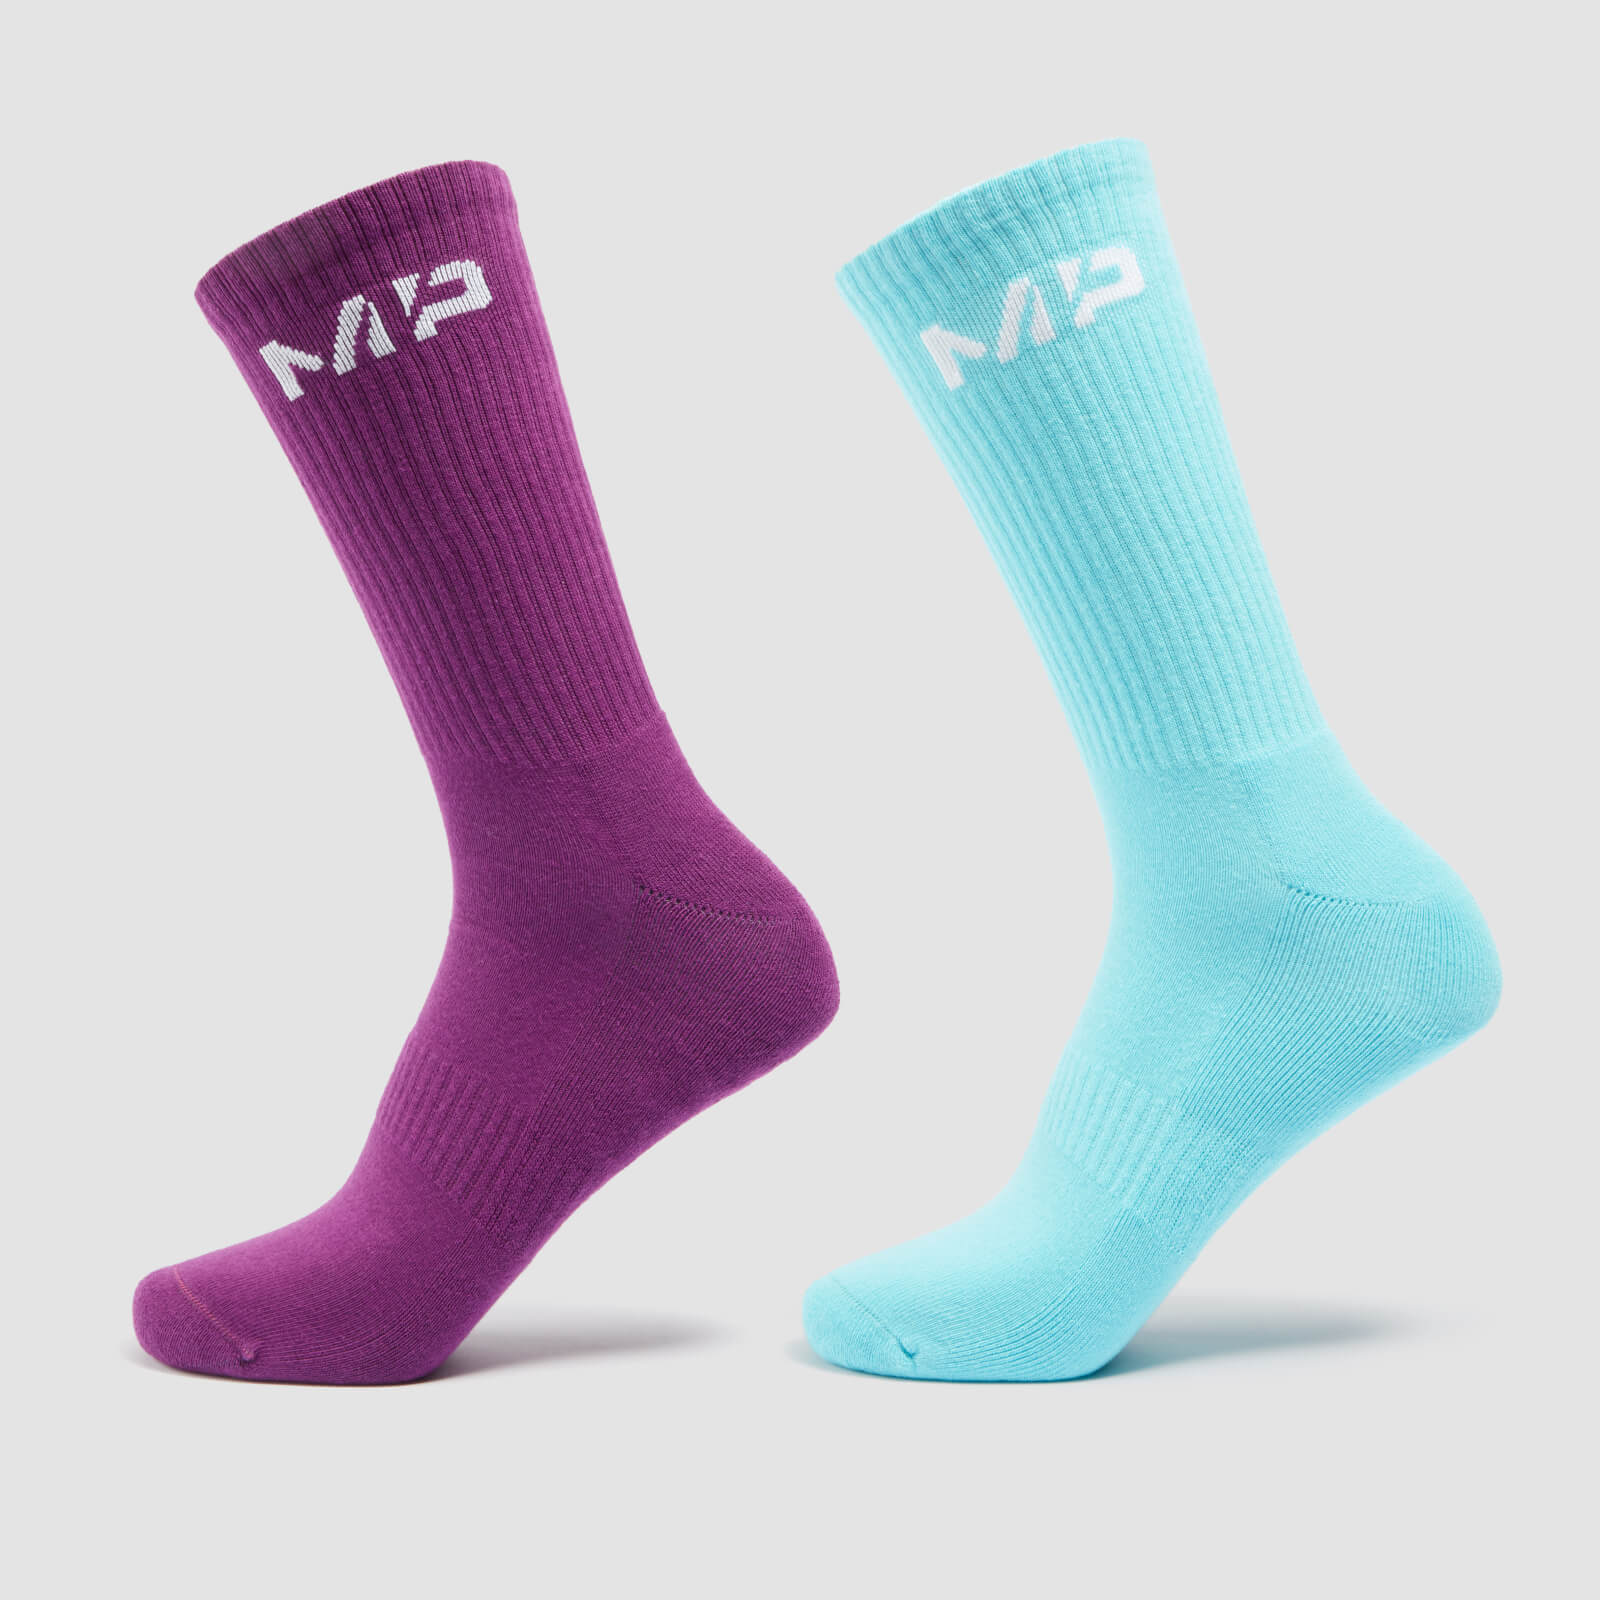 MP Women's Crayola Crew Socks (2 Pack) - Vivid Violet/Aquamarine product